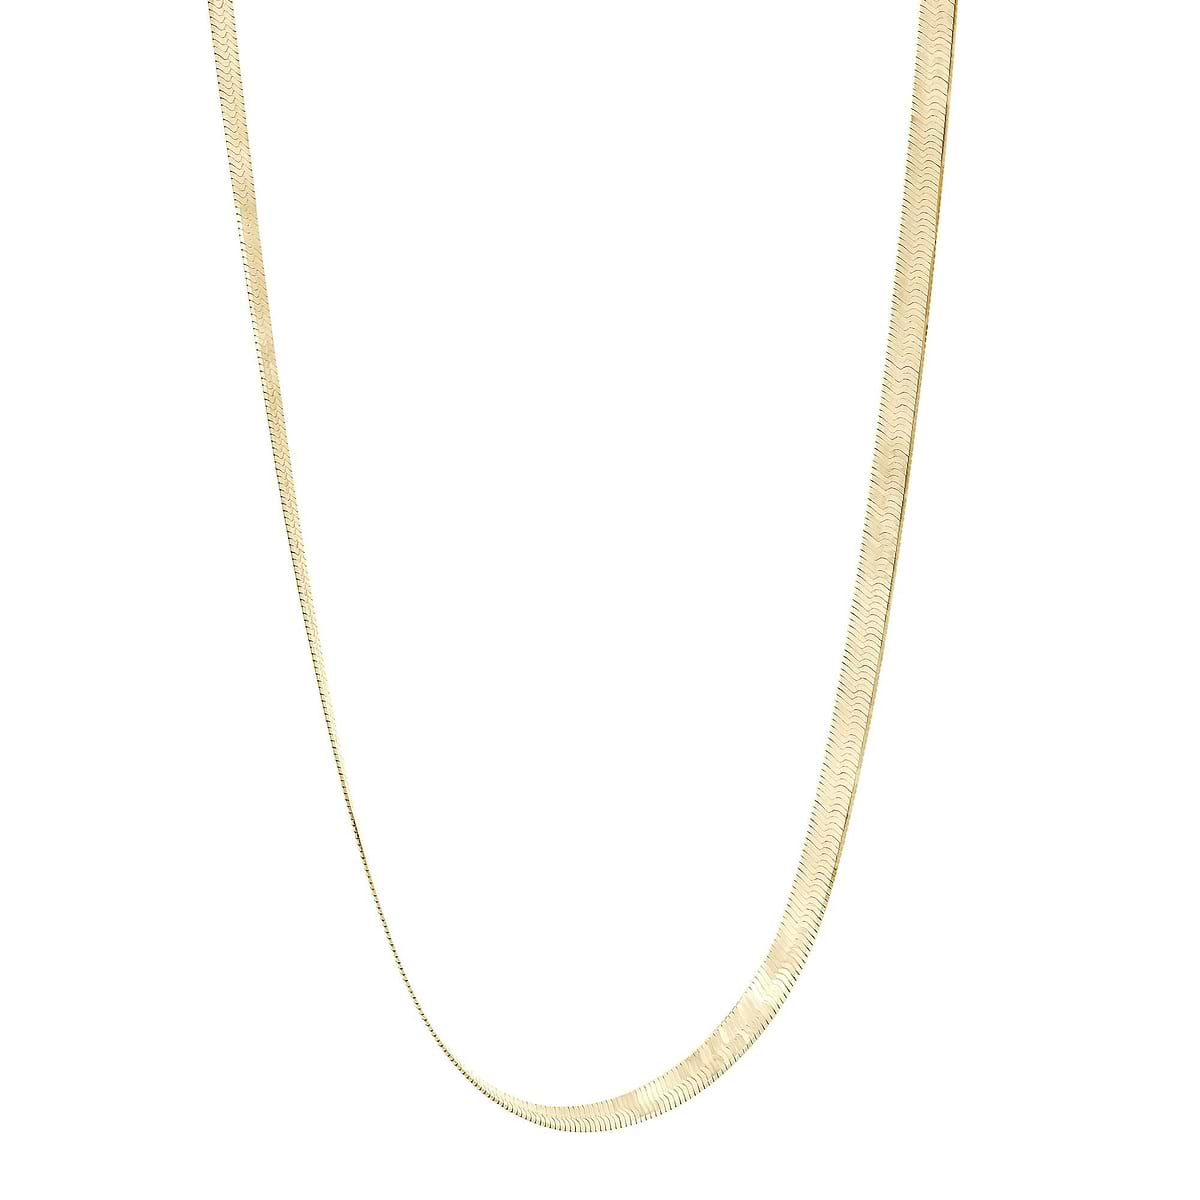 Herringbone Necklace 16in in 14K Yellow Gold